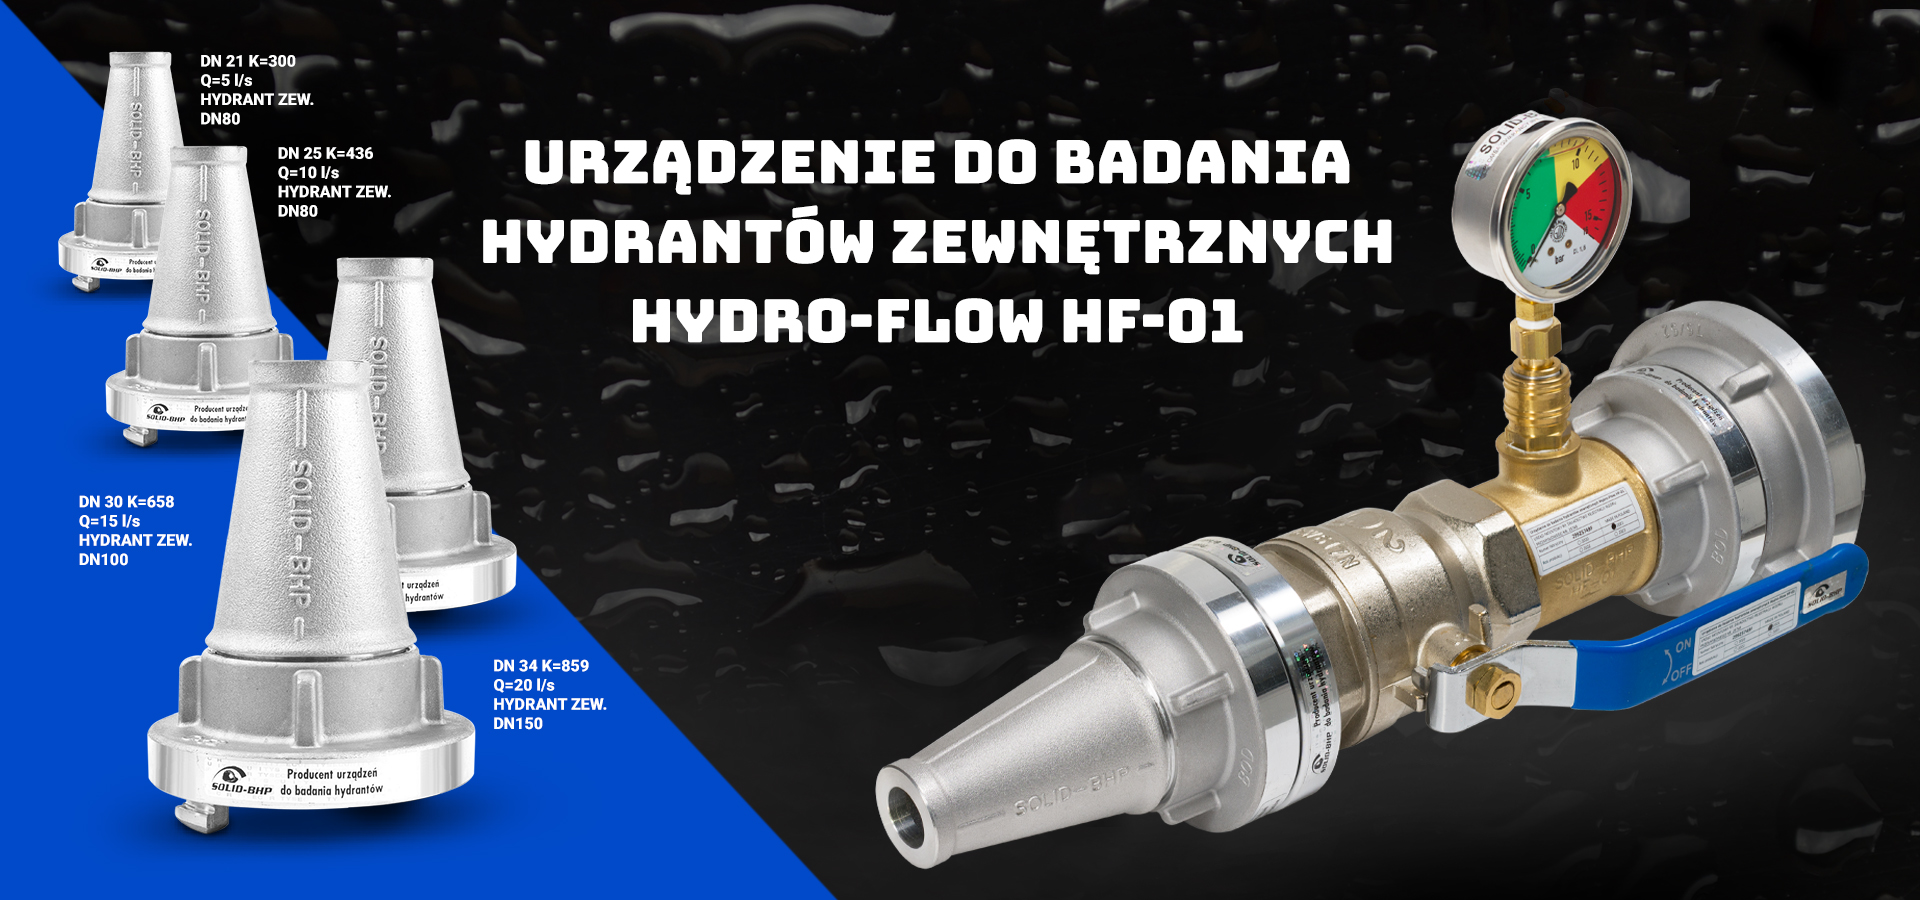 Hydro-flow HF-01